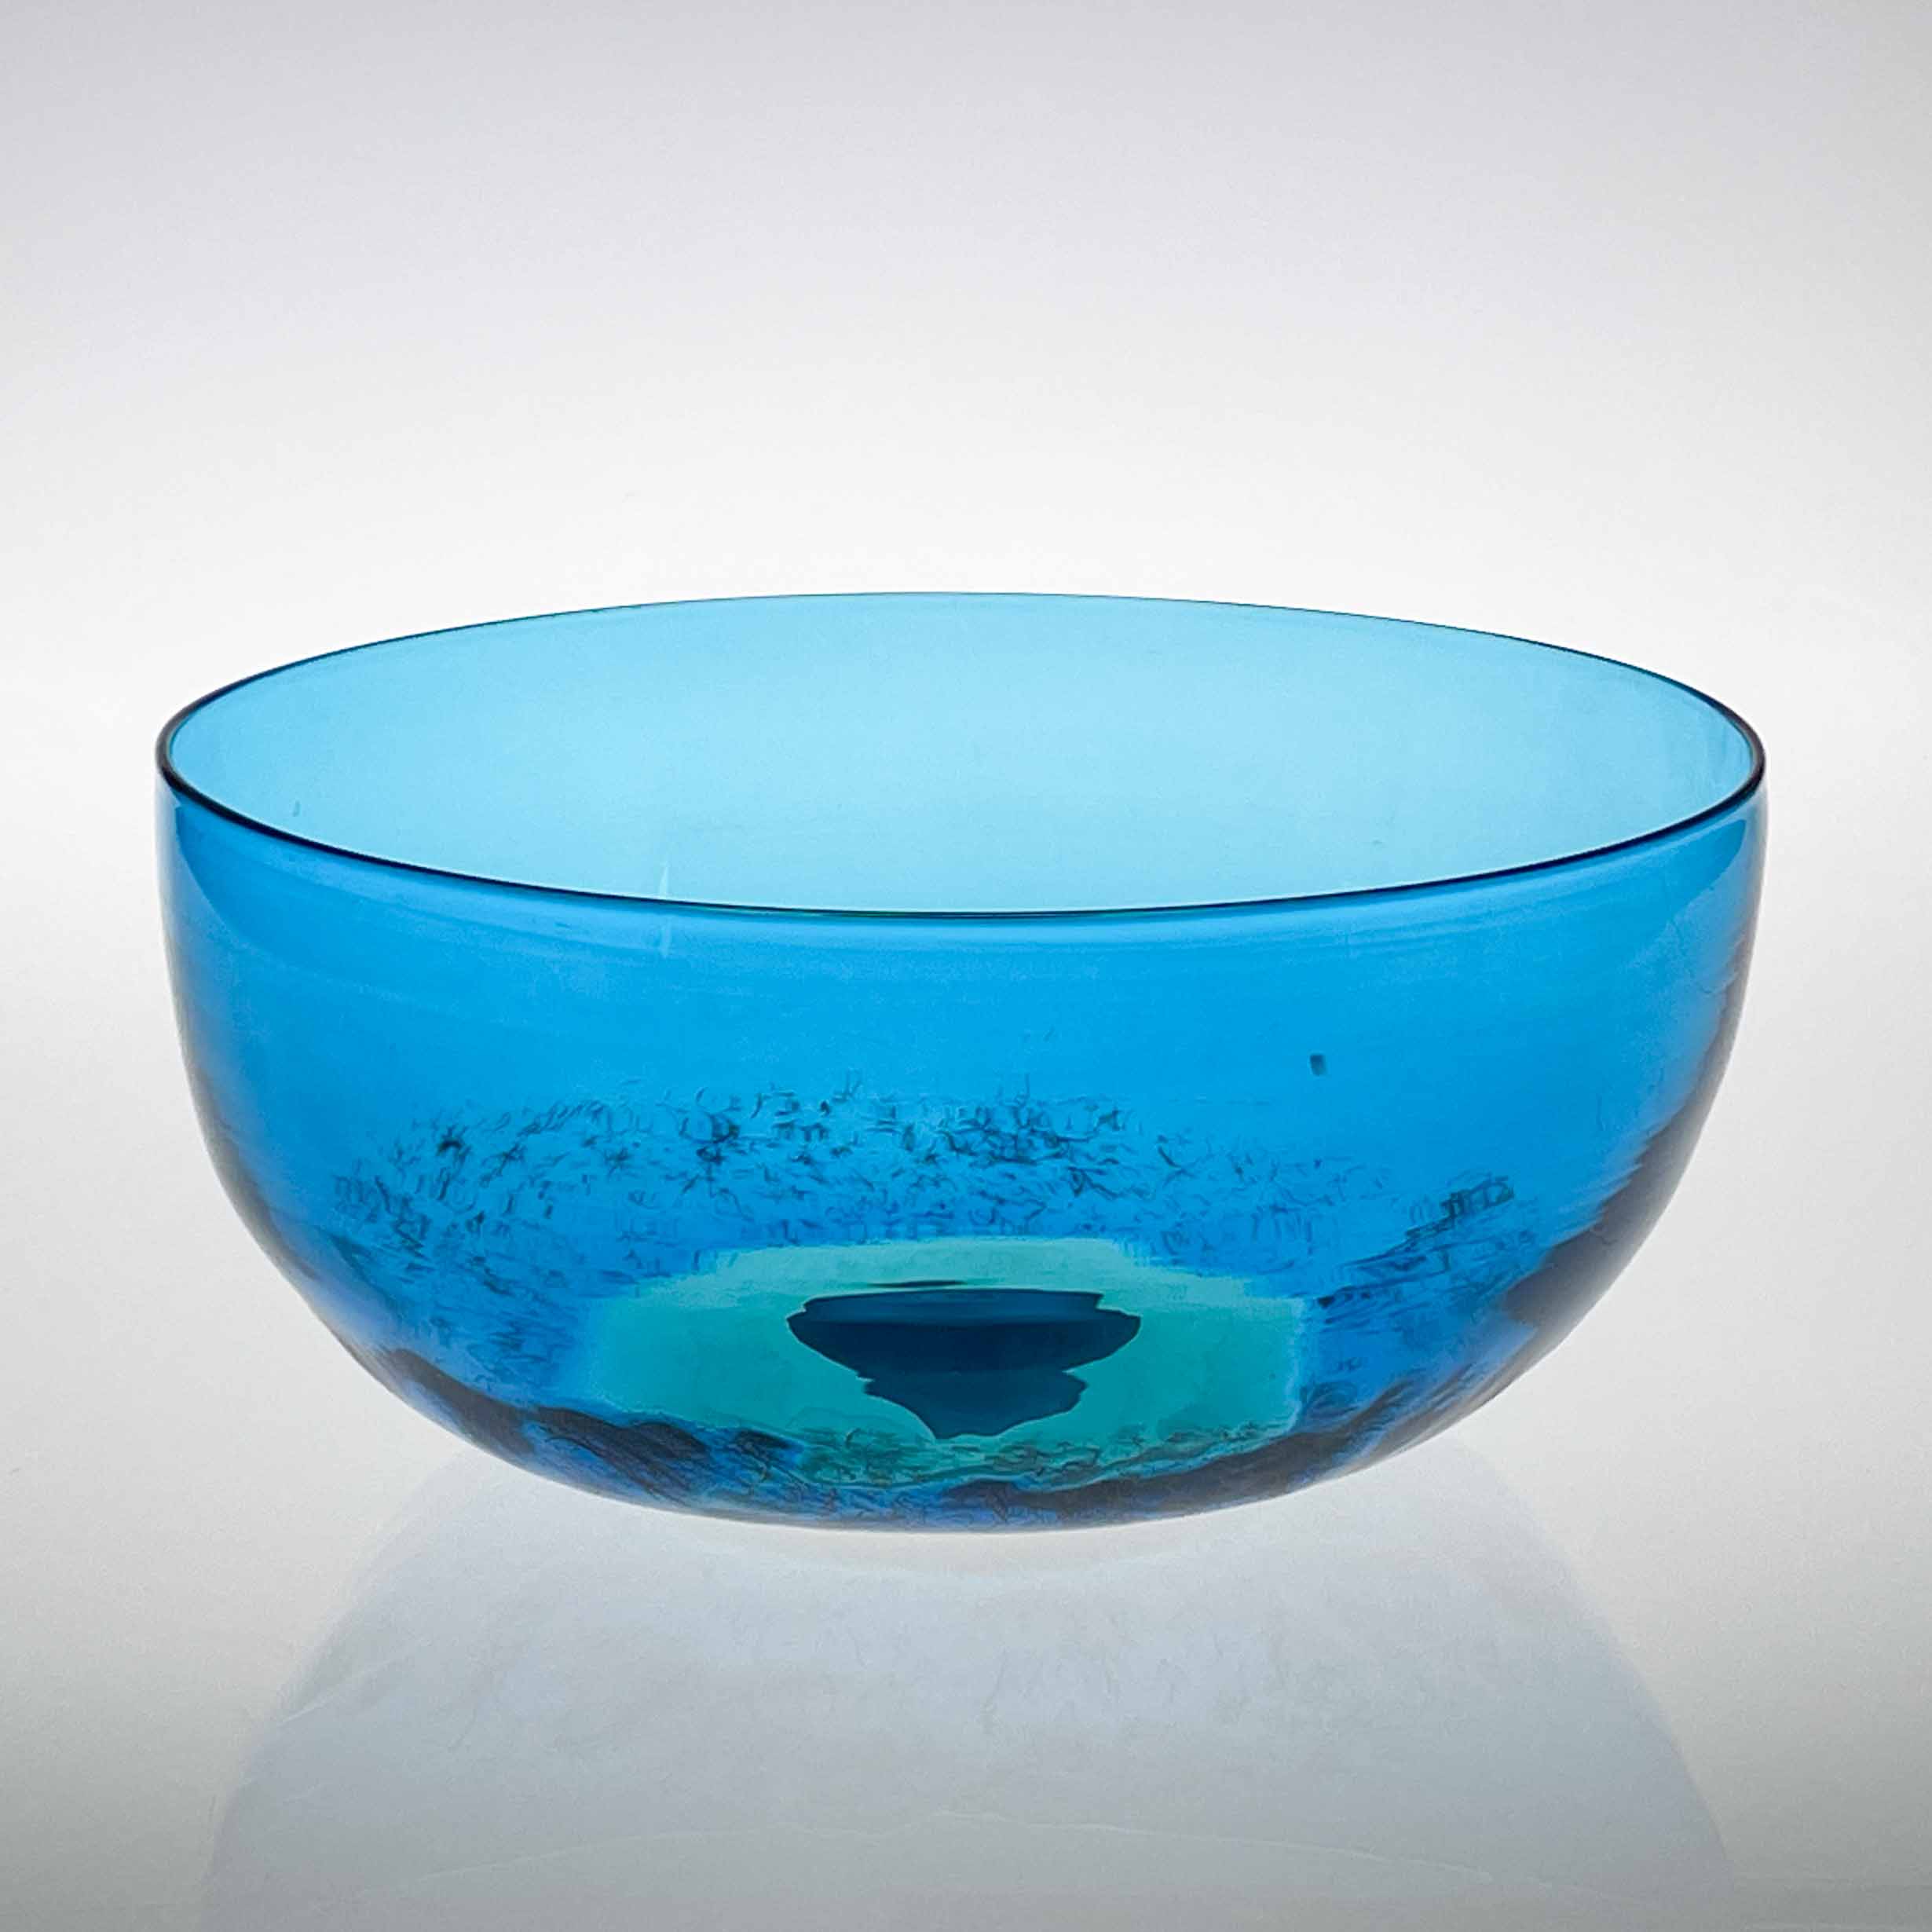 Tapio Wirkkala - Glass art-object "Inari", model 537.12 - Venini, Italy circa 1985